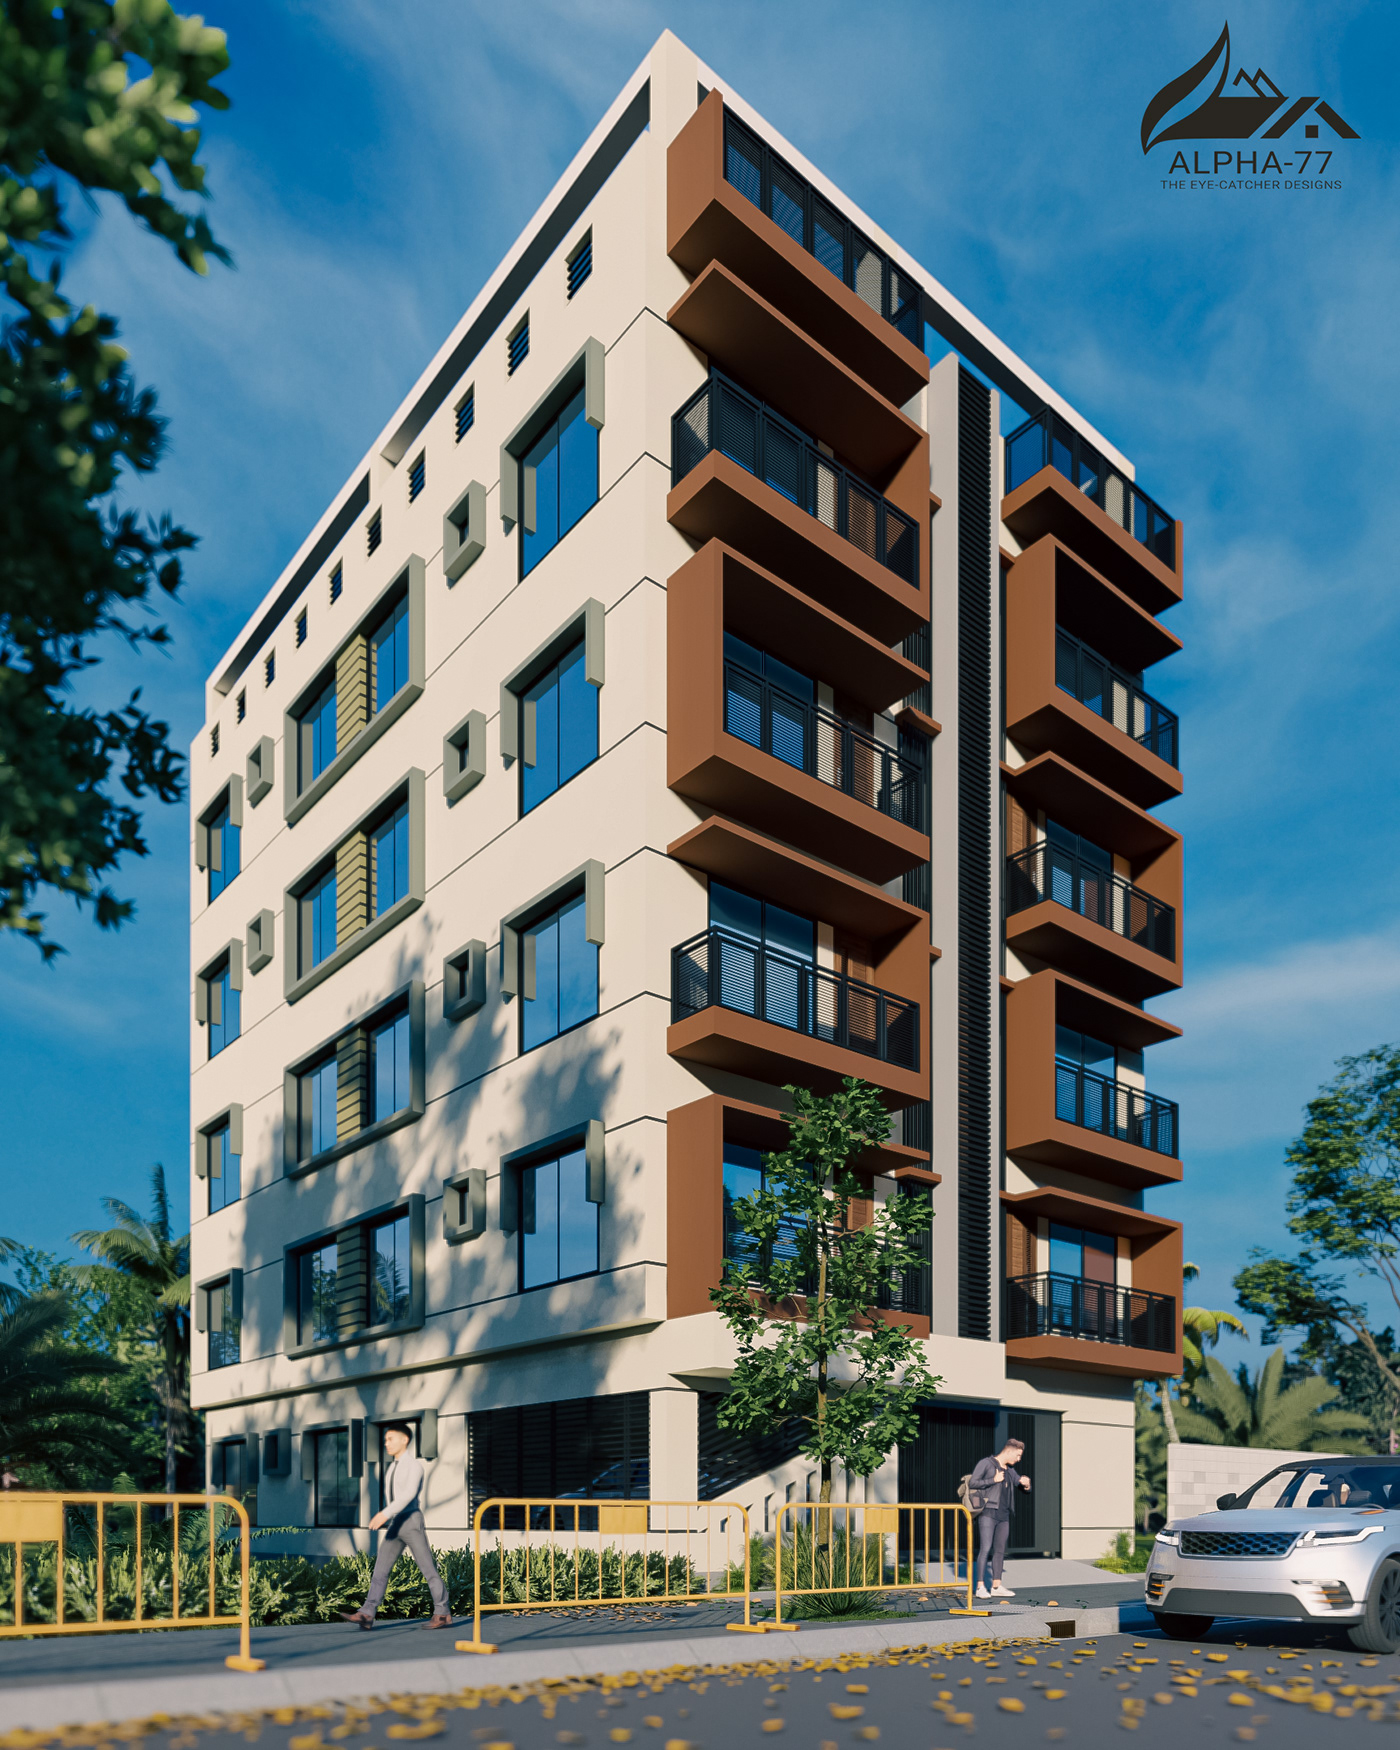 3D 5 storied building apartment building architectural architecture home plan HOUSE DESIGN Render view visualization